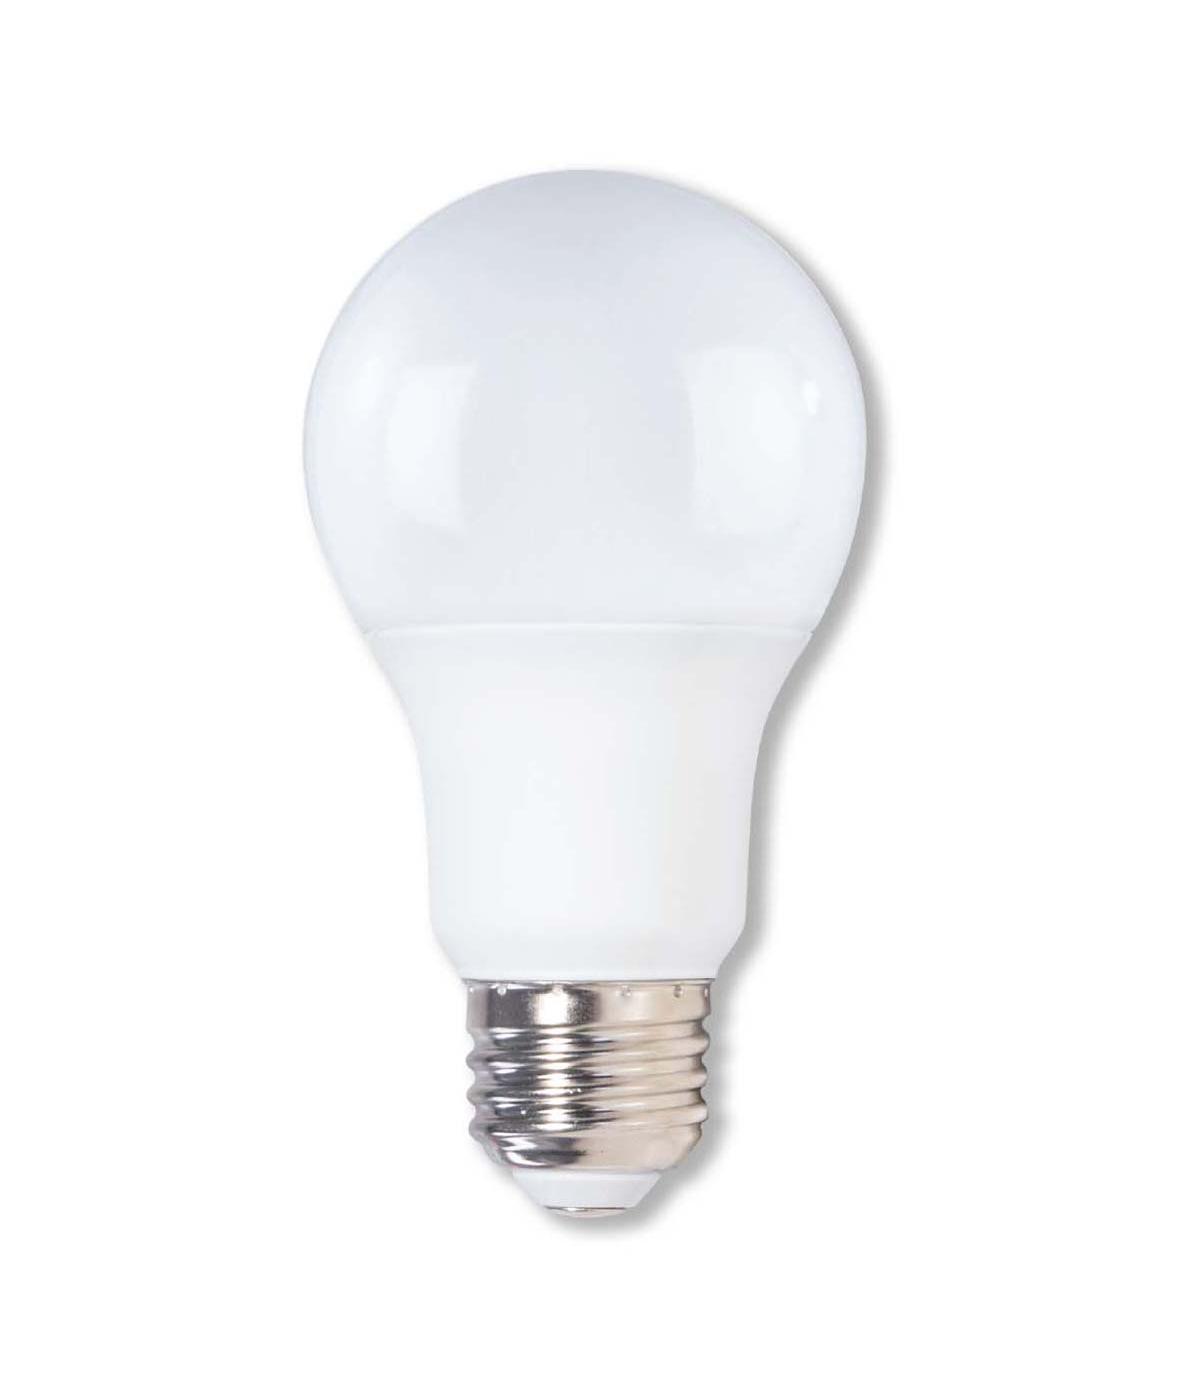 H-E-B A19 60-Watt LED Light Bulbs - Soft White; image 2 of 2